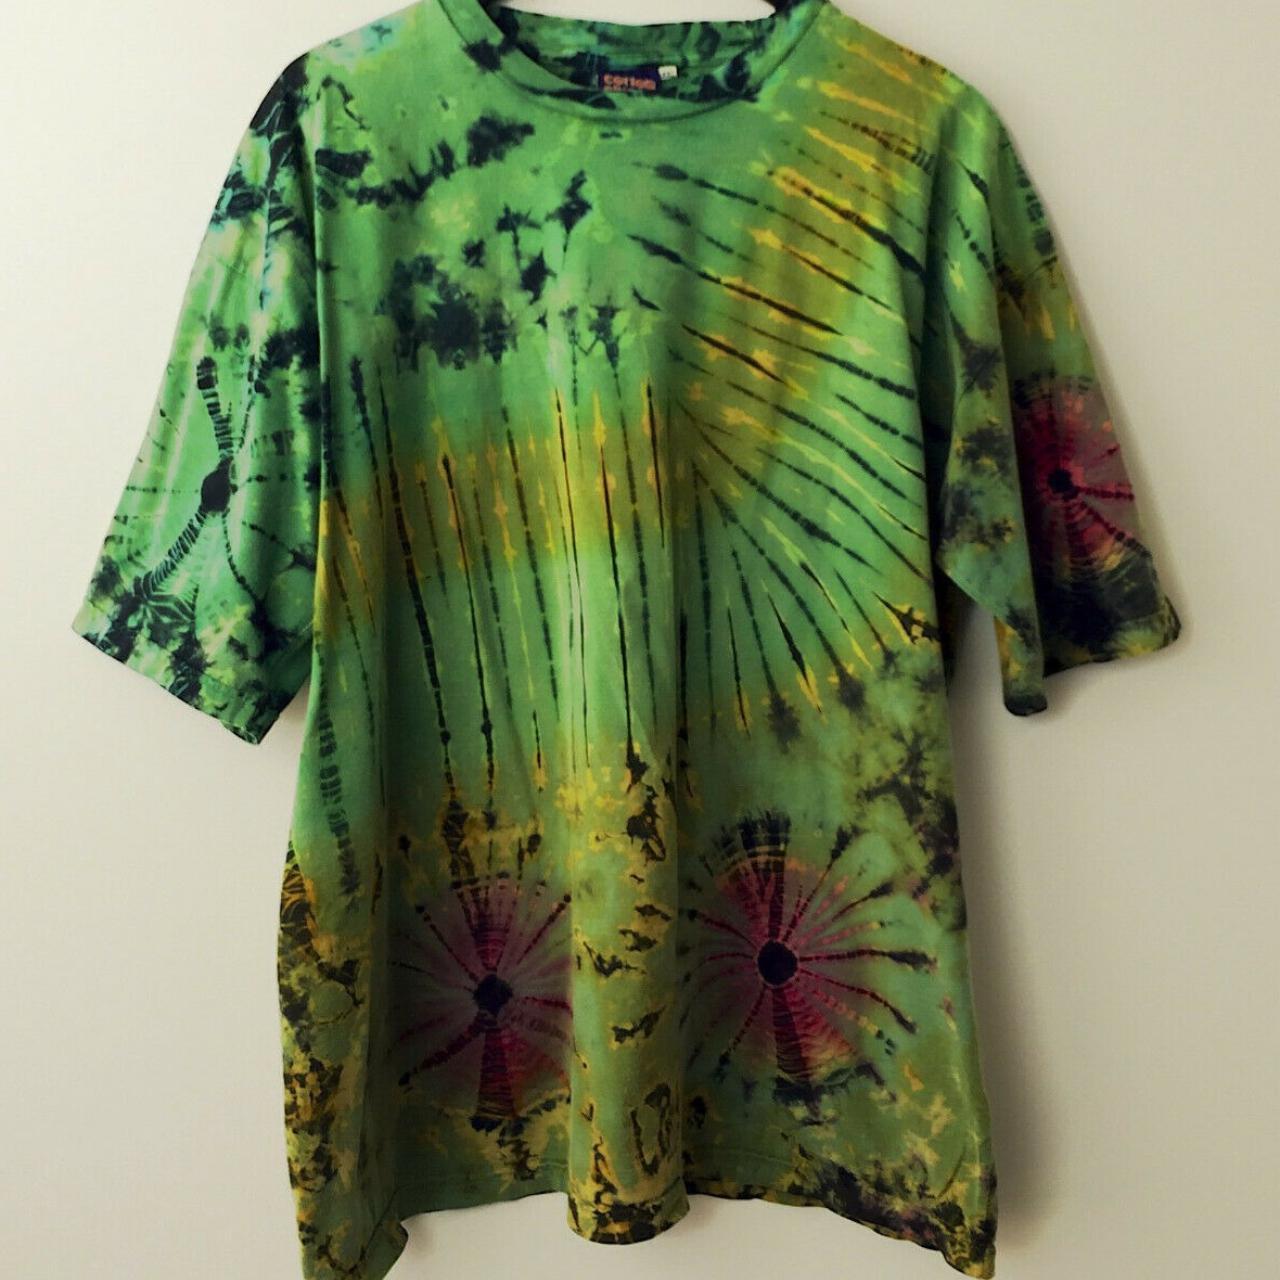 Product Image 1 - Tie Dye Tee Shirt Hippie